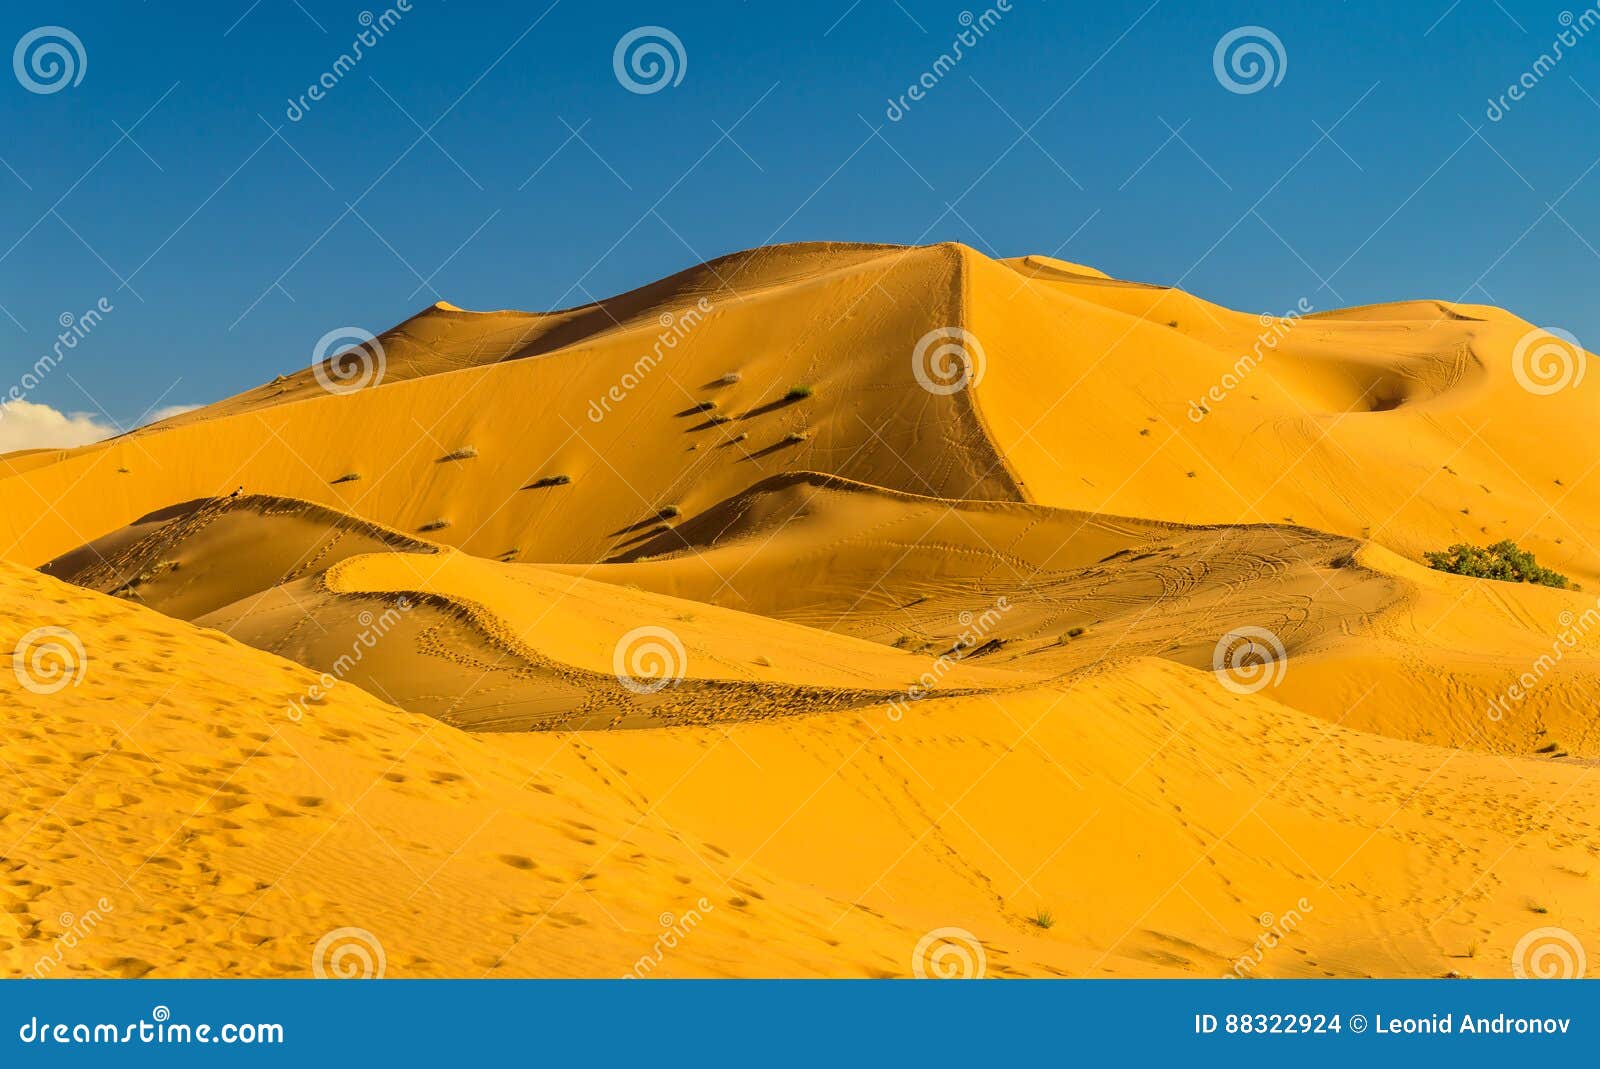 dunes of erg chebbi near merzouga in morocco